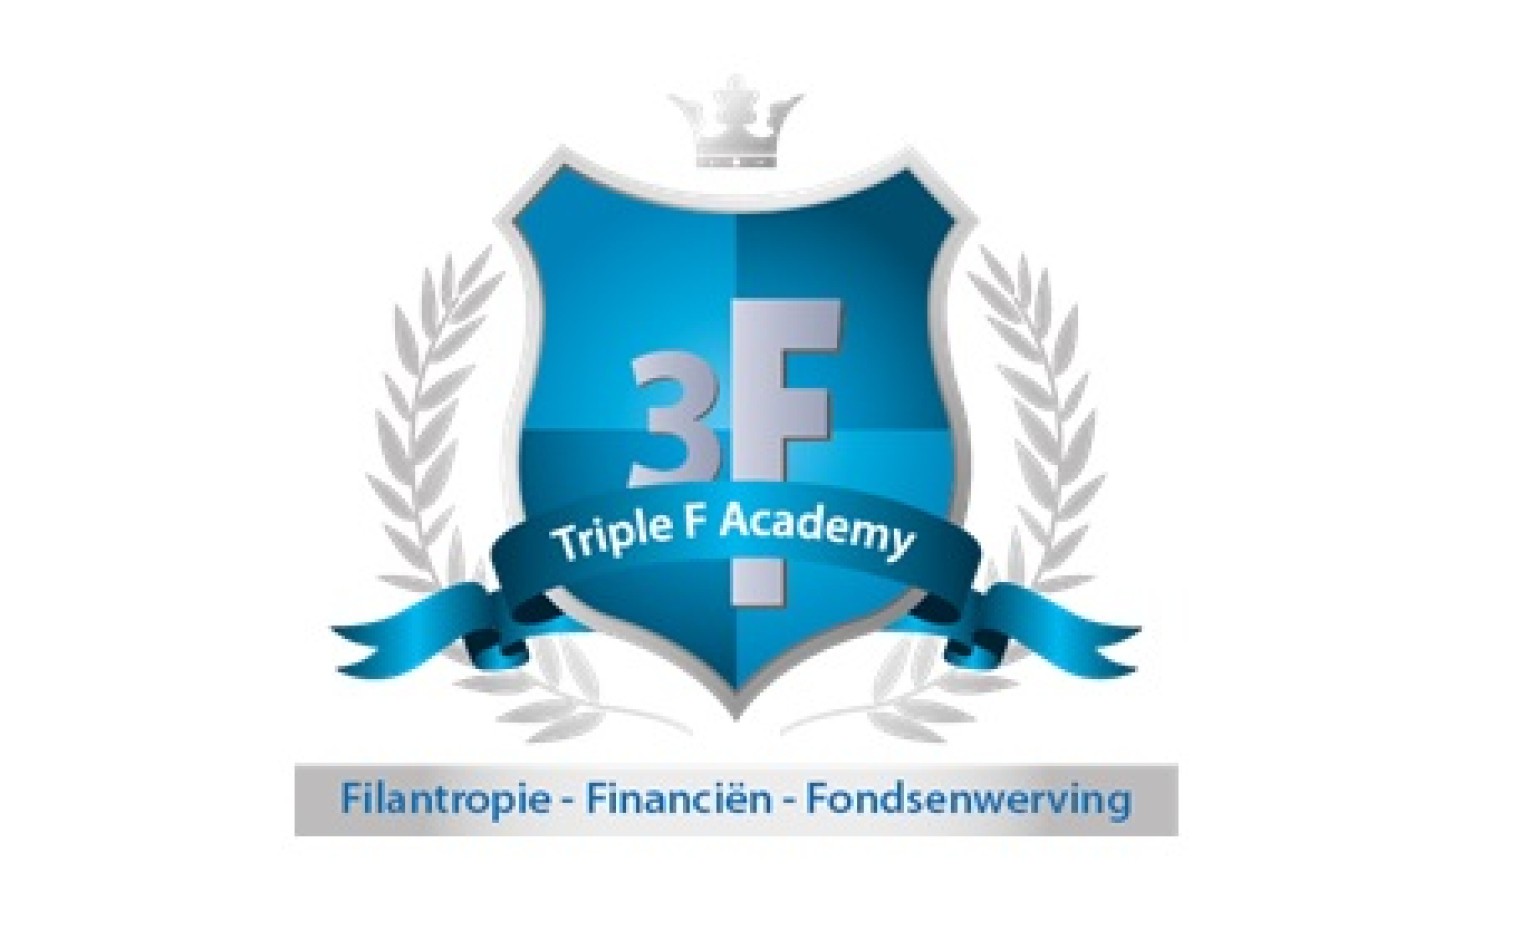 Triple F Academy